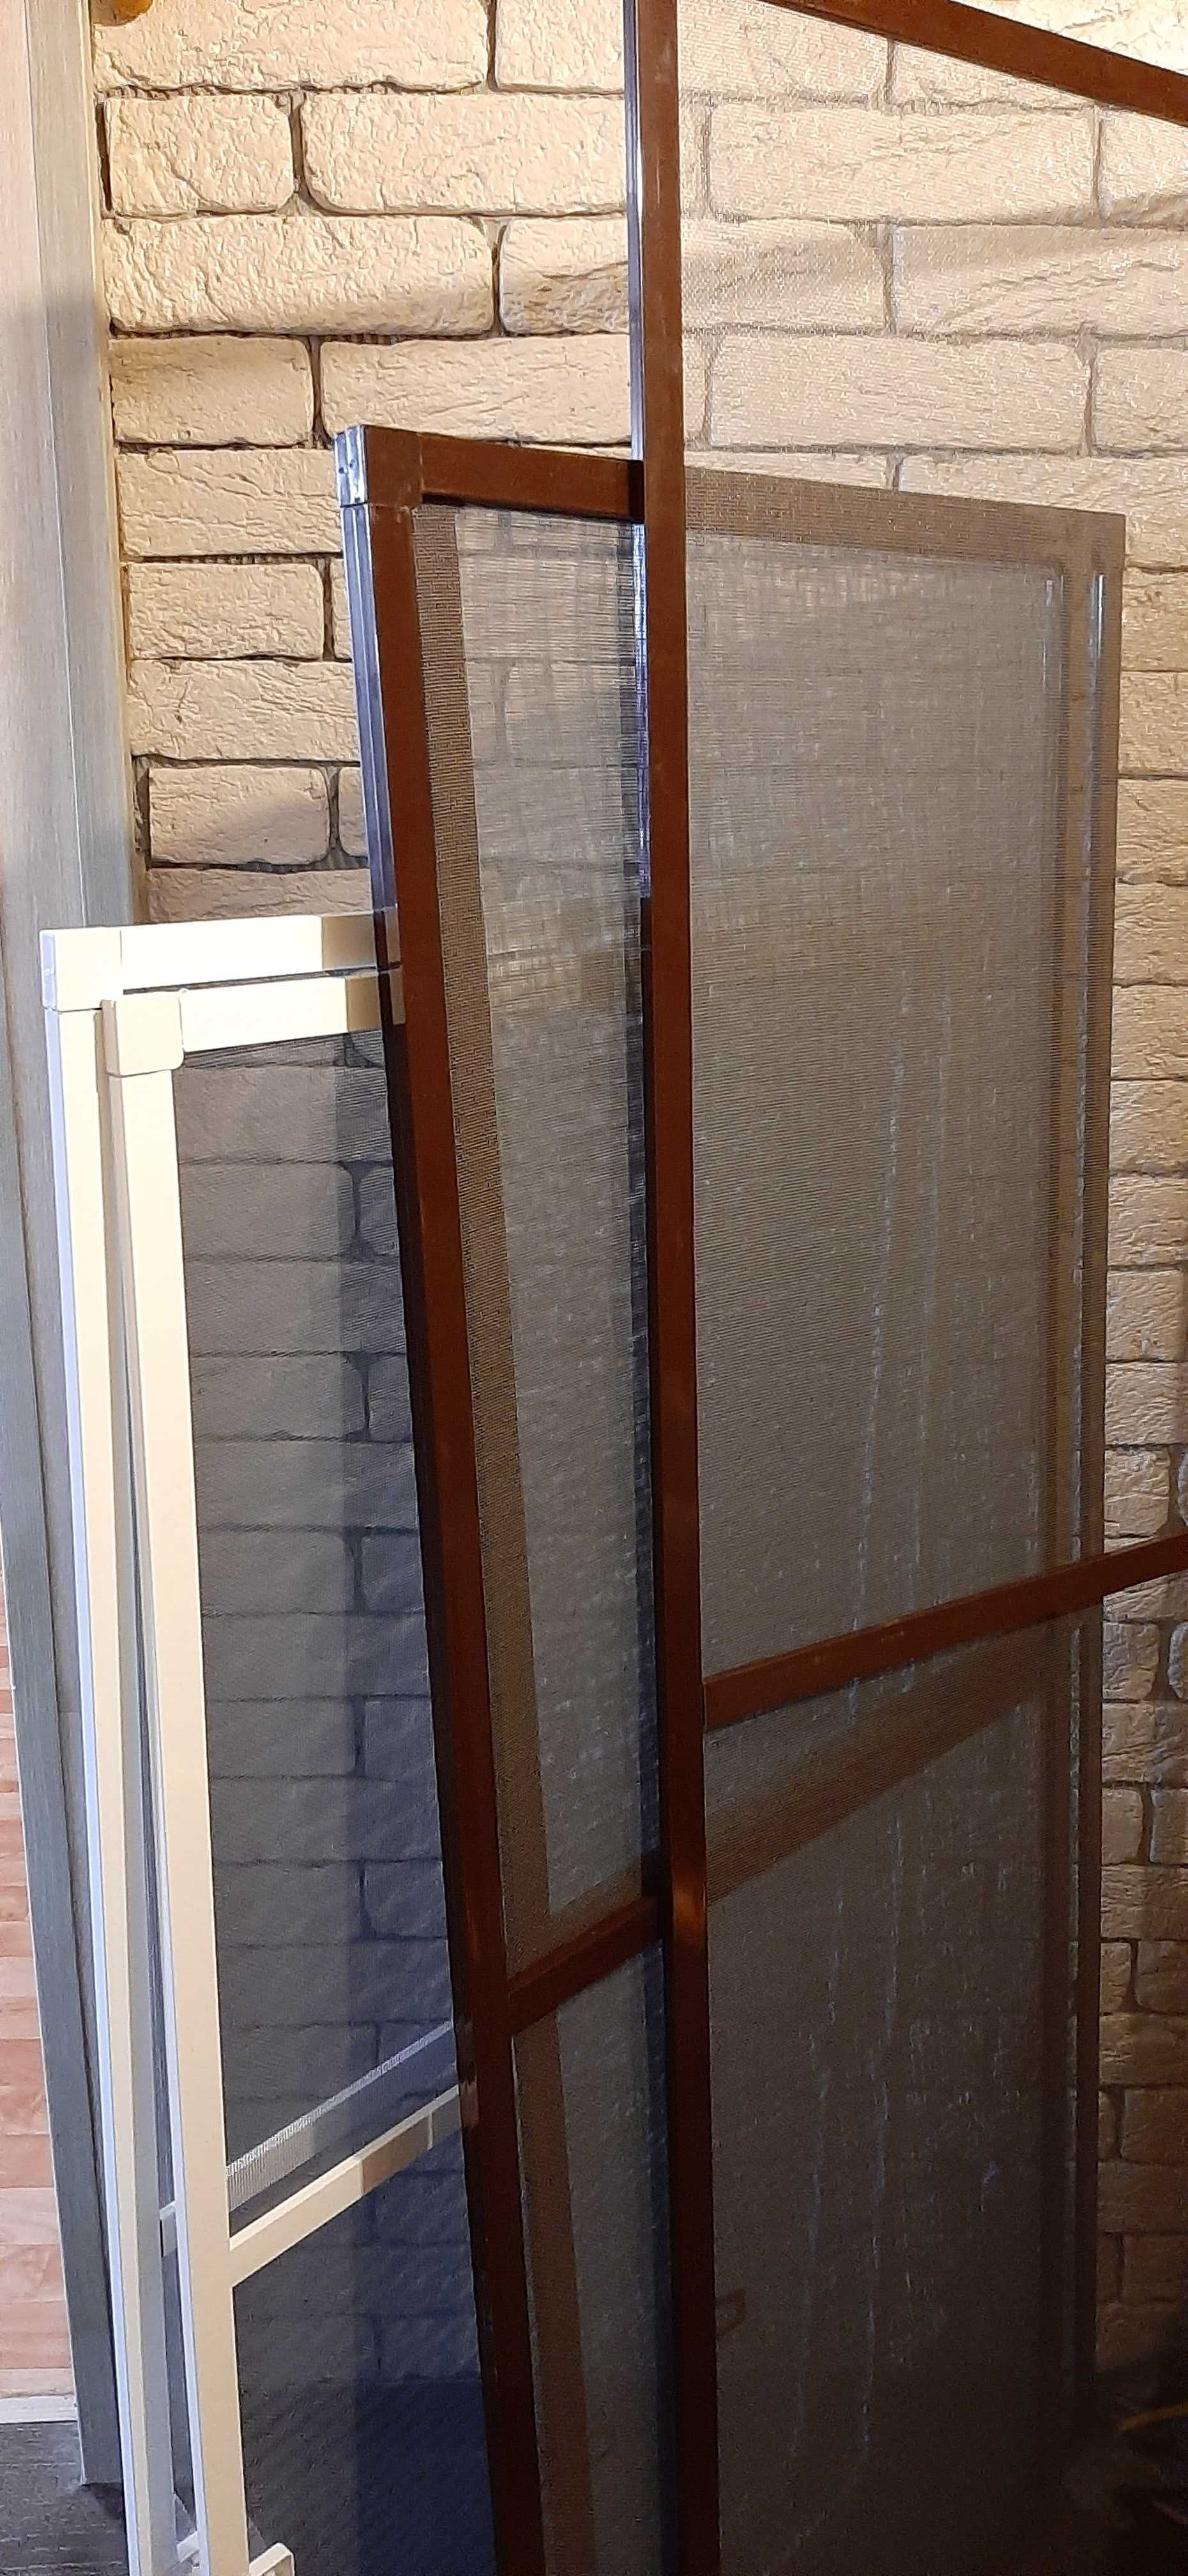 Антимоскитные сетки на окна и двери